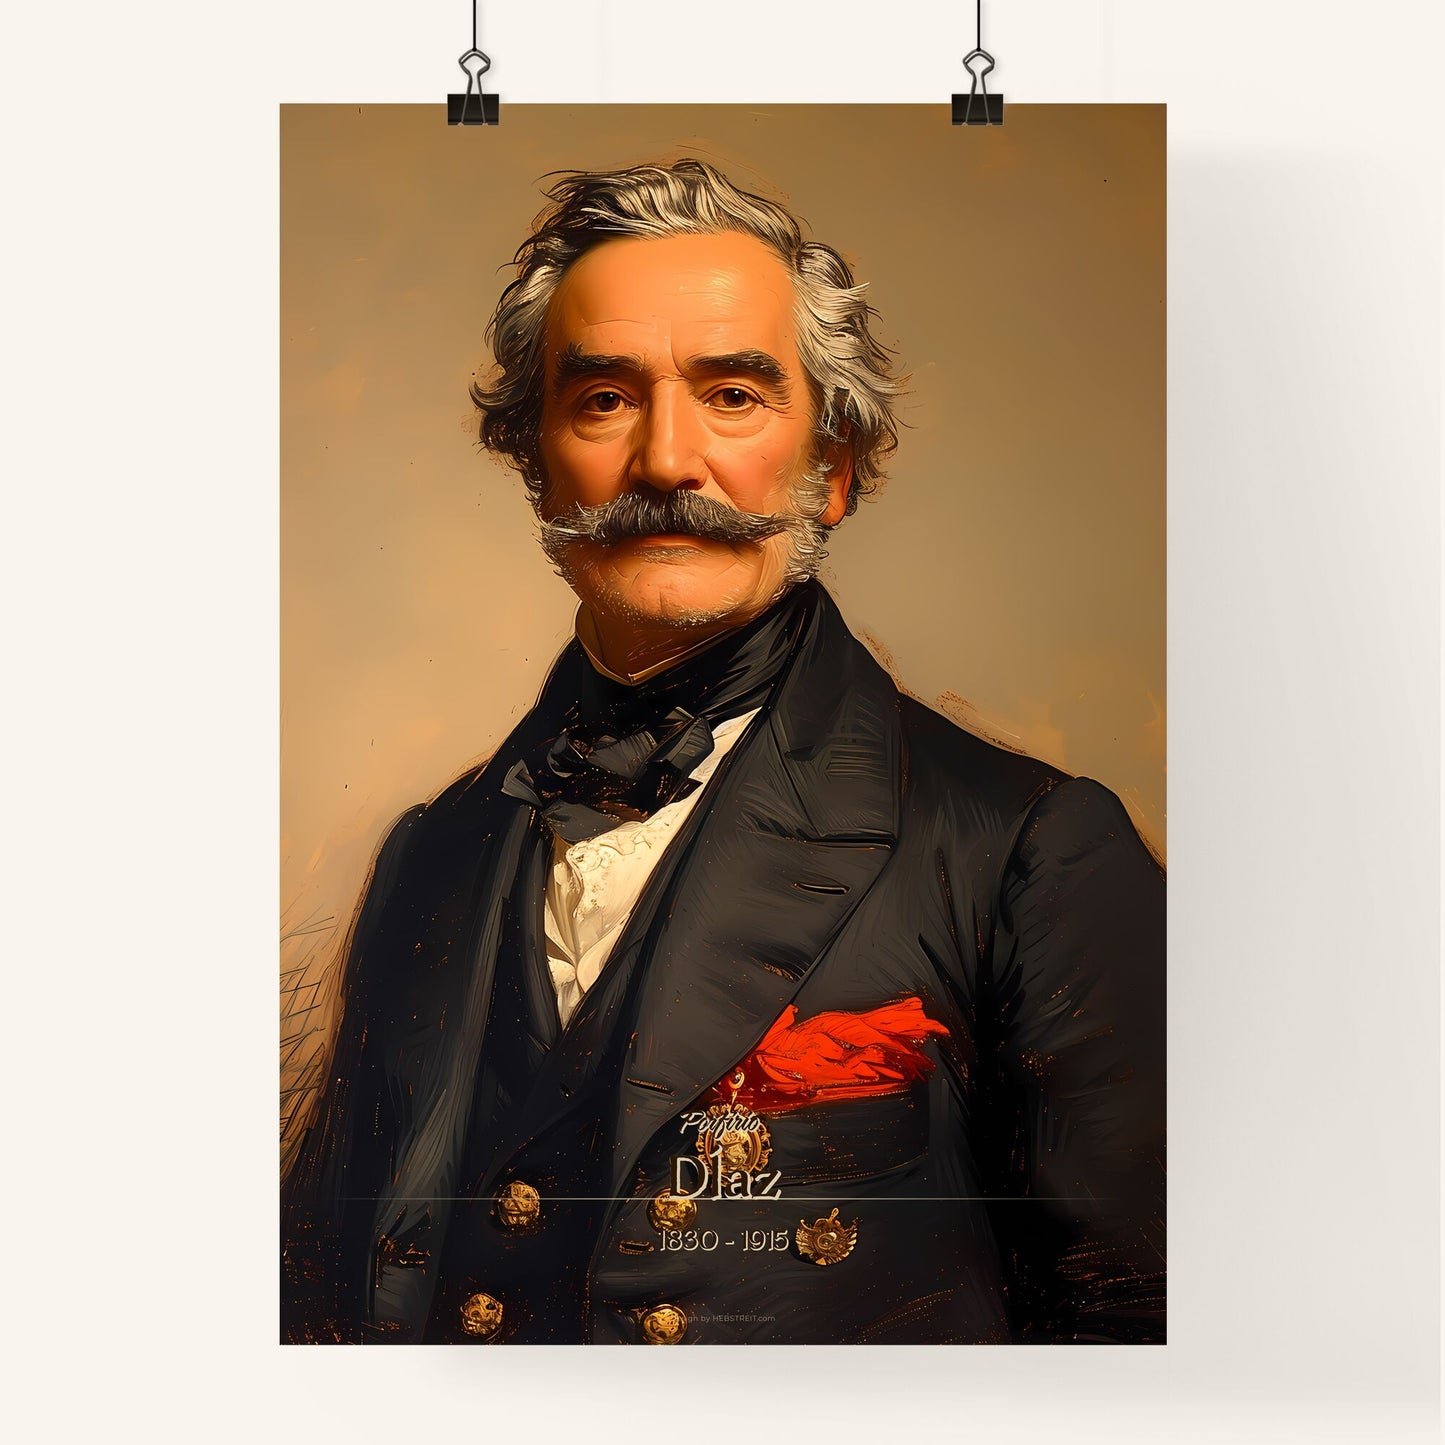 Porfirio, DÍaz, 1830 - 1915, A Poster of a man with a mustache and a suit Default Title